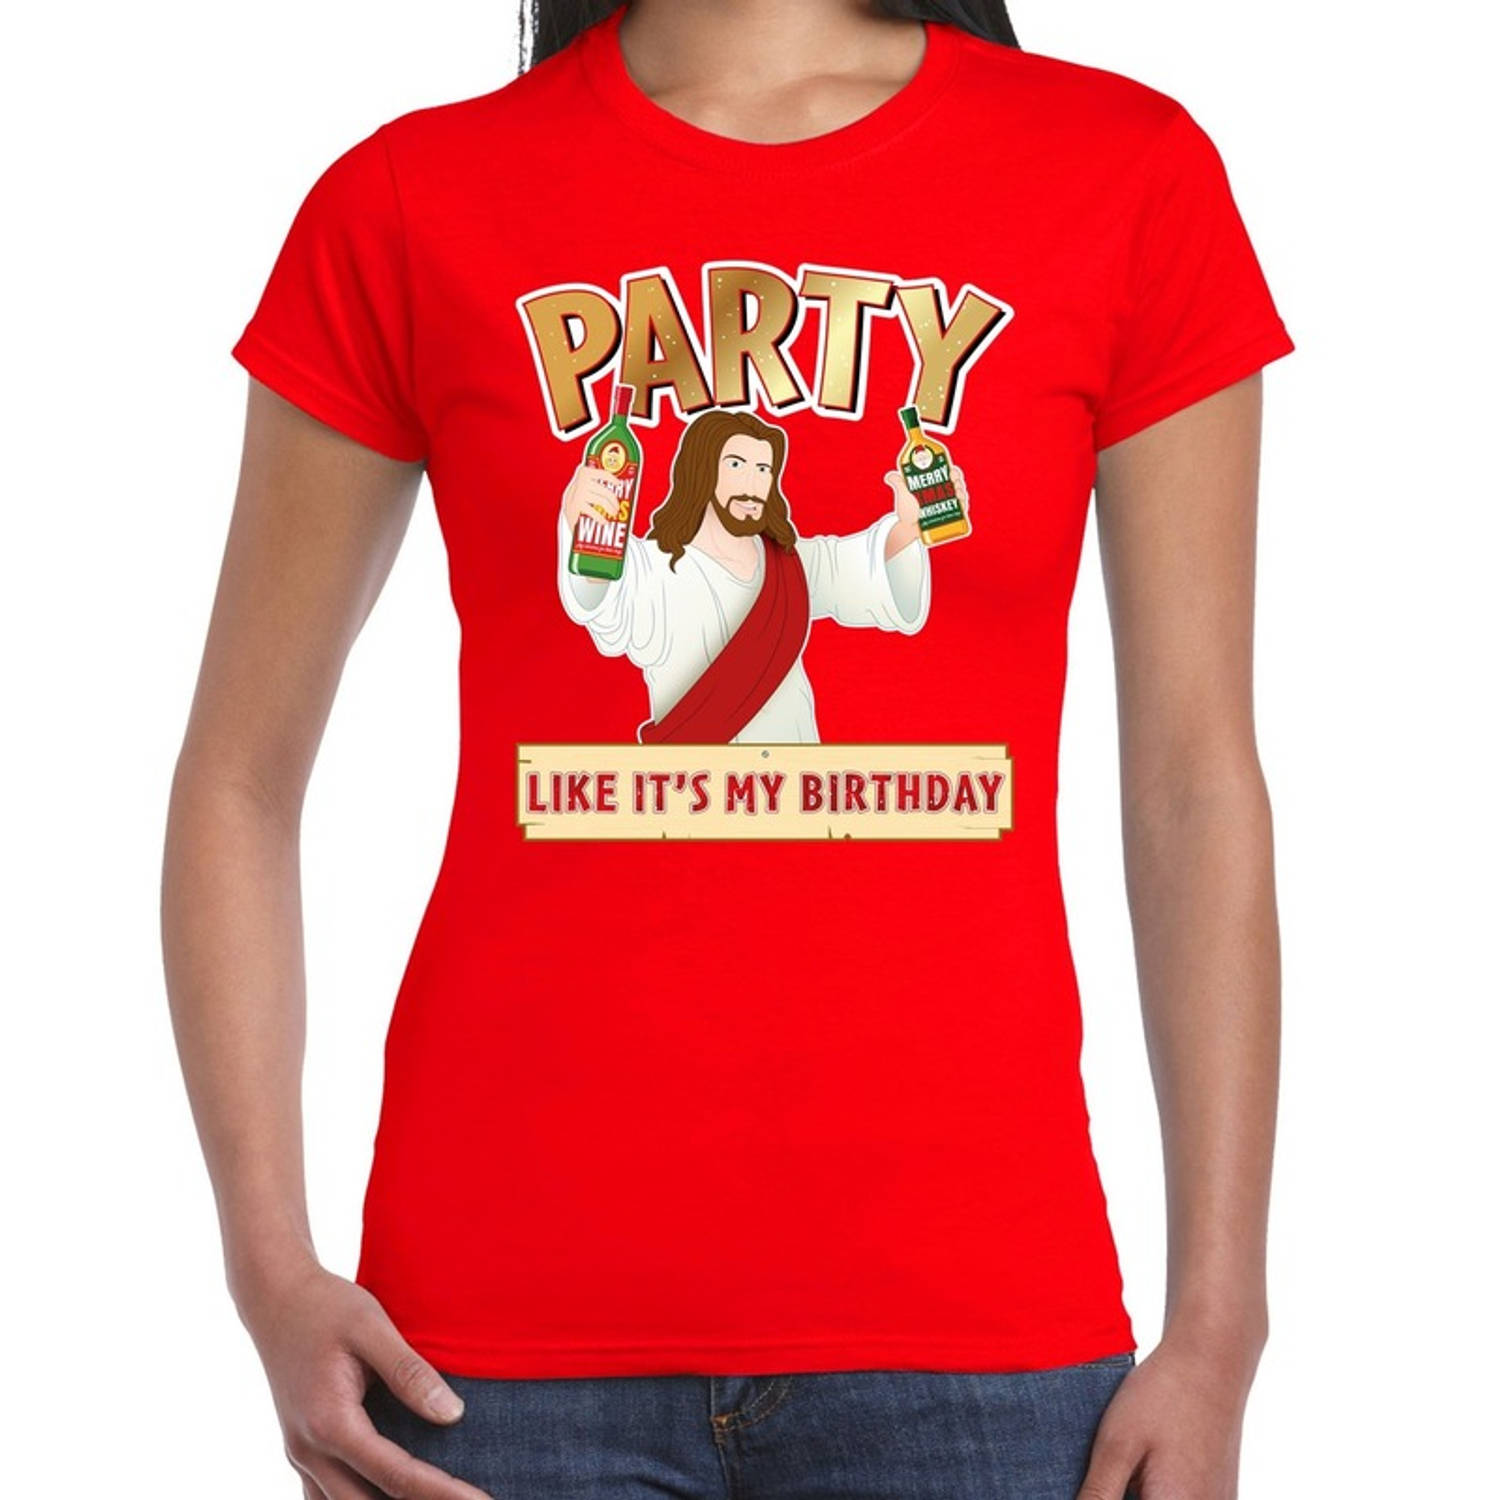 Rood kerstshirt / kerstkleding met party Jezus voor dames L - kerst t-shirts